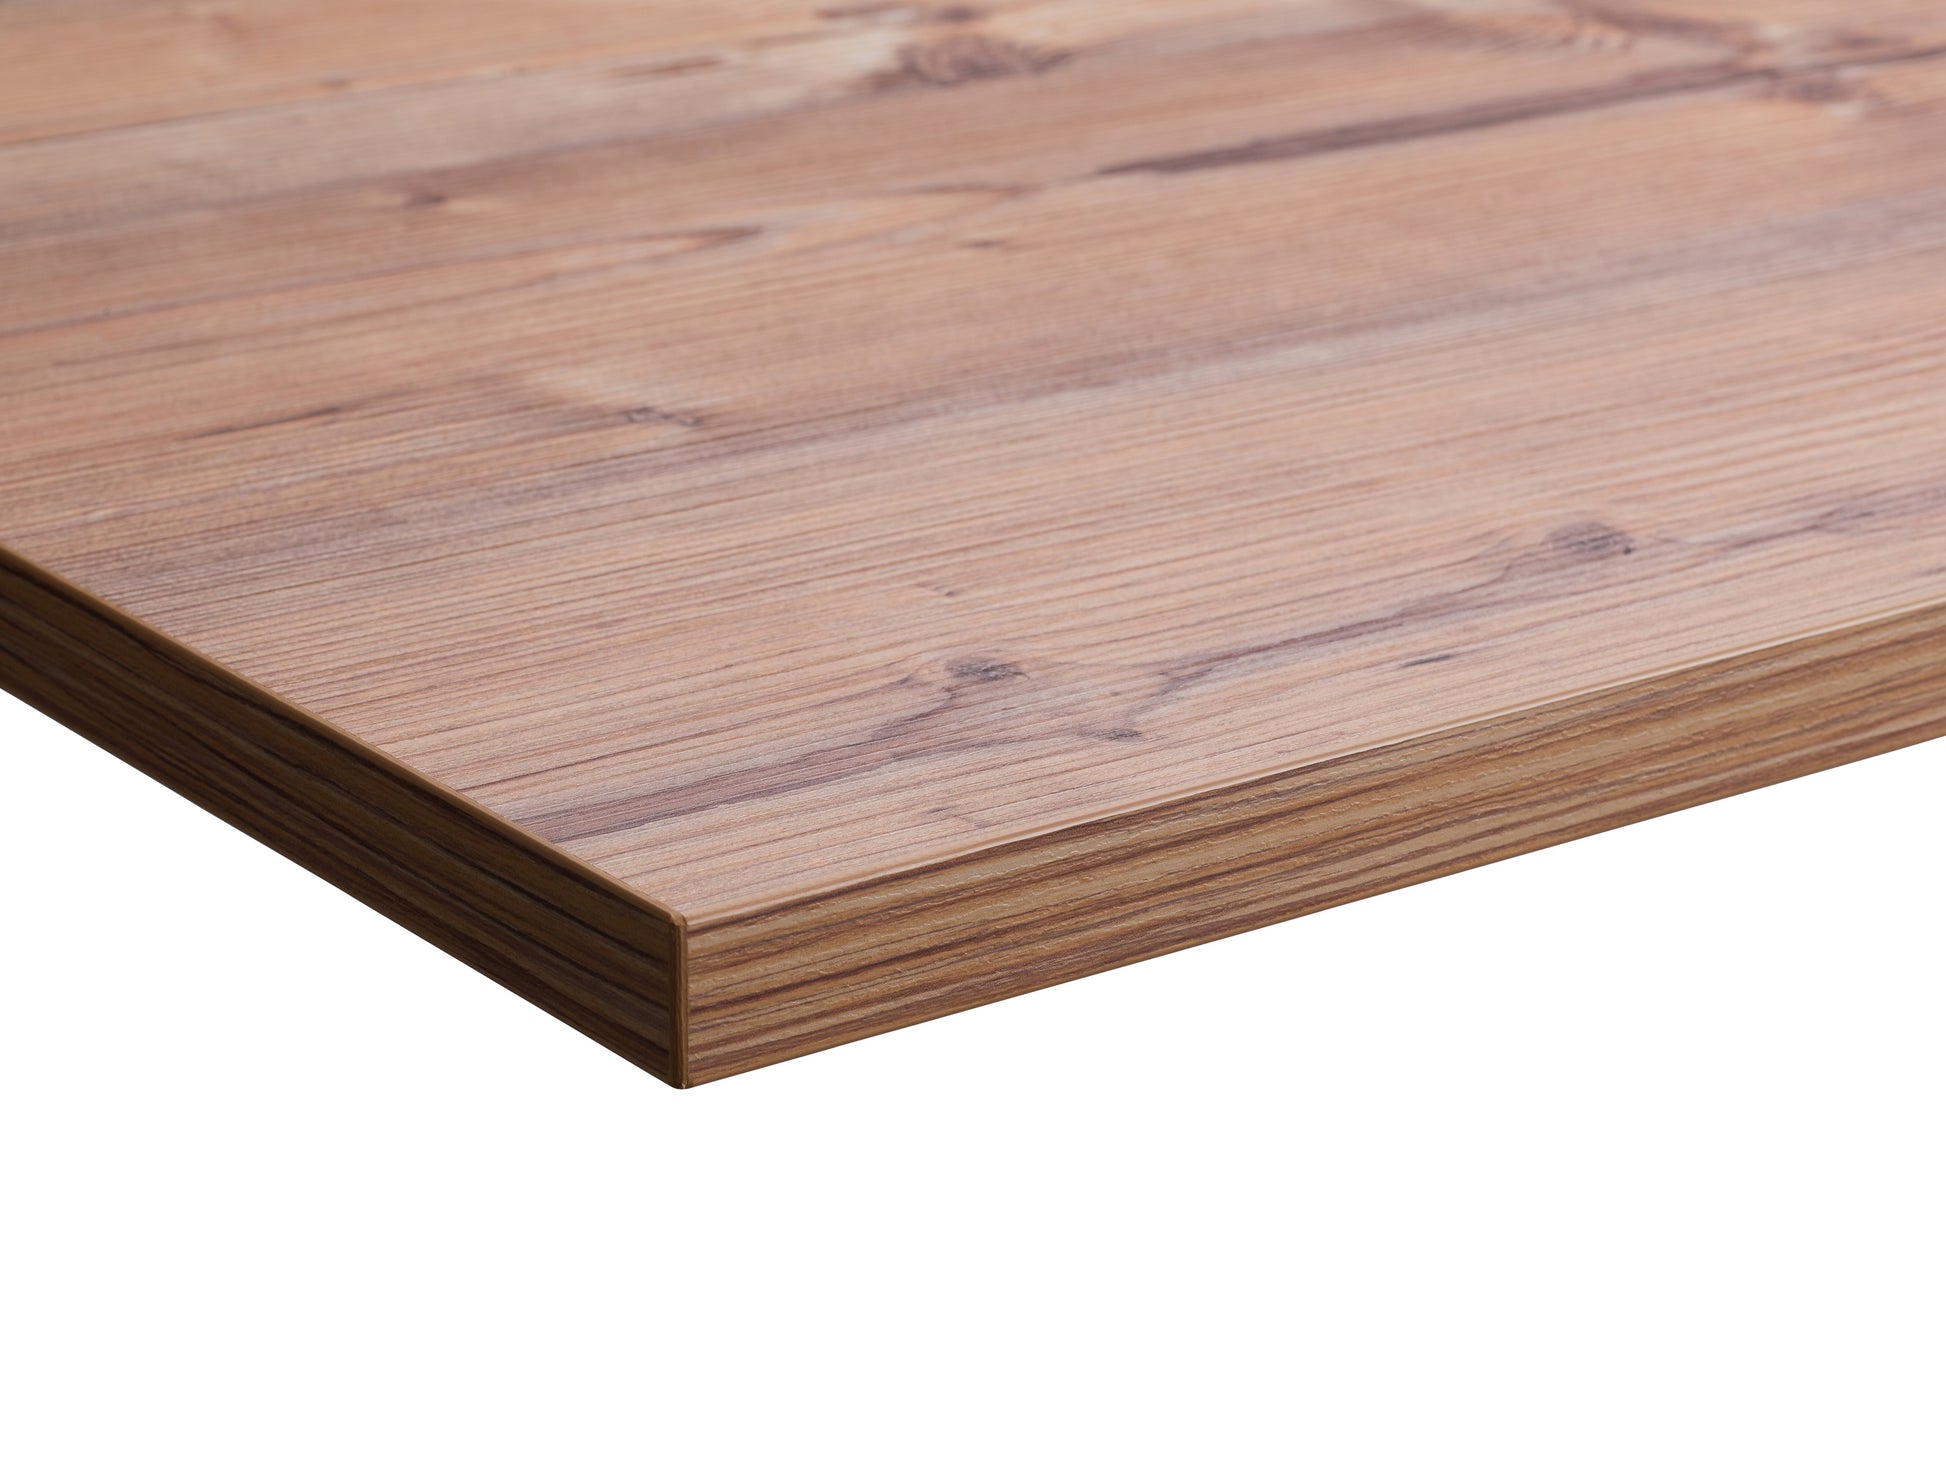 Kalmar Modesty Panel in timber